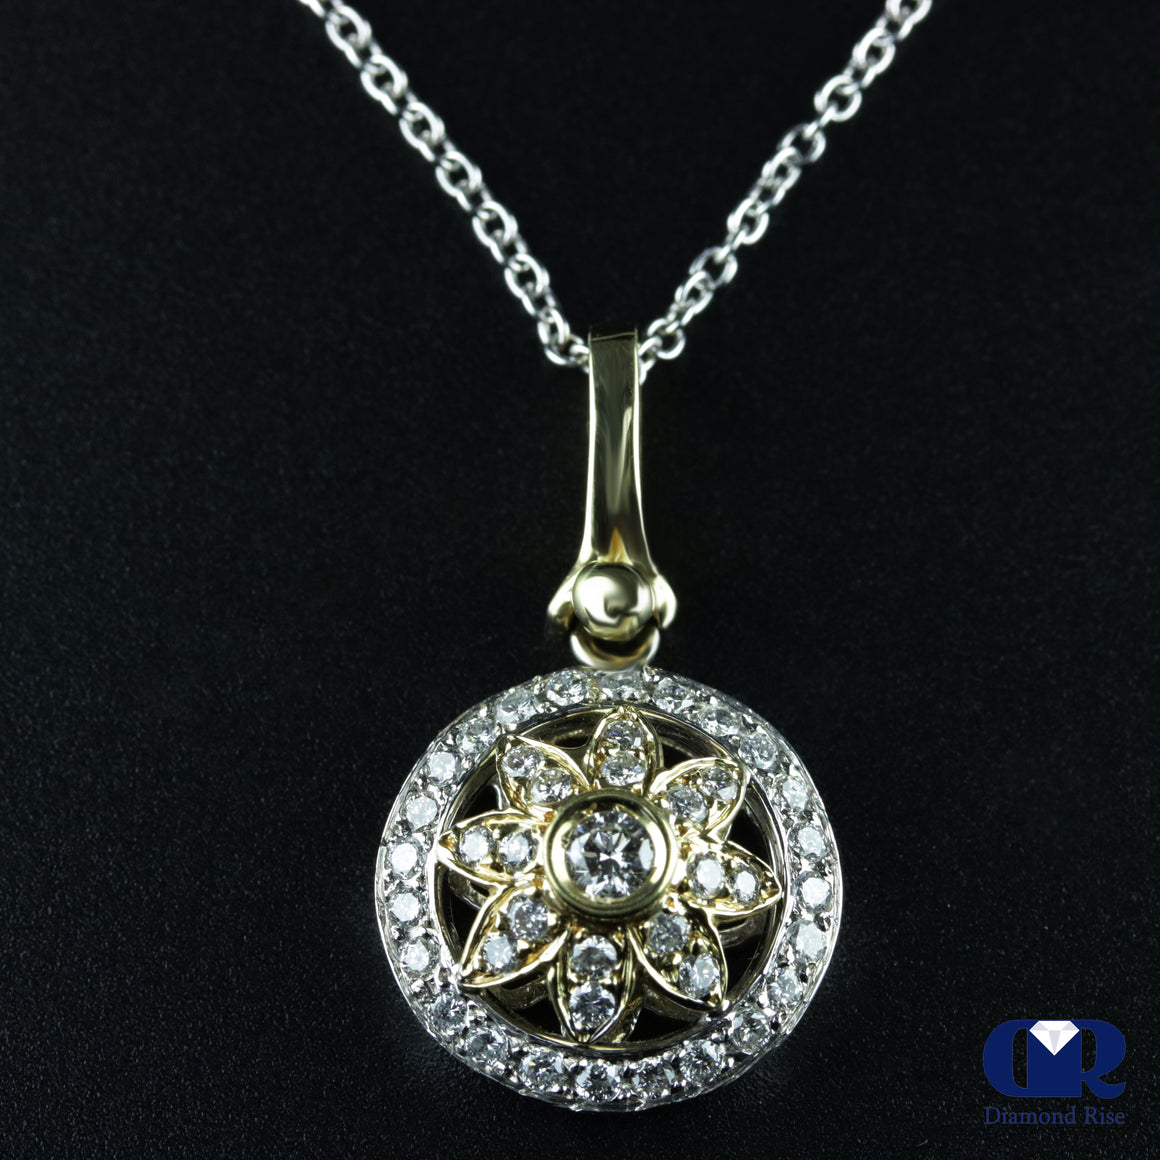 Natural 0.85 Ct Round Diamond Pendant Necklace 14K White & Yellow Gold W/16" Chain - Diamond Rise Jewelry